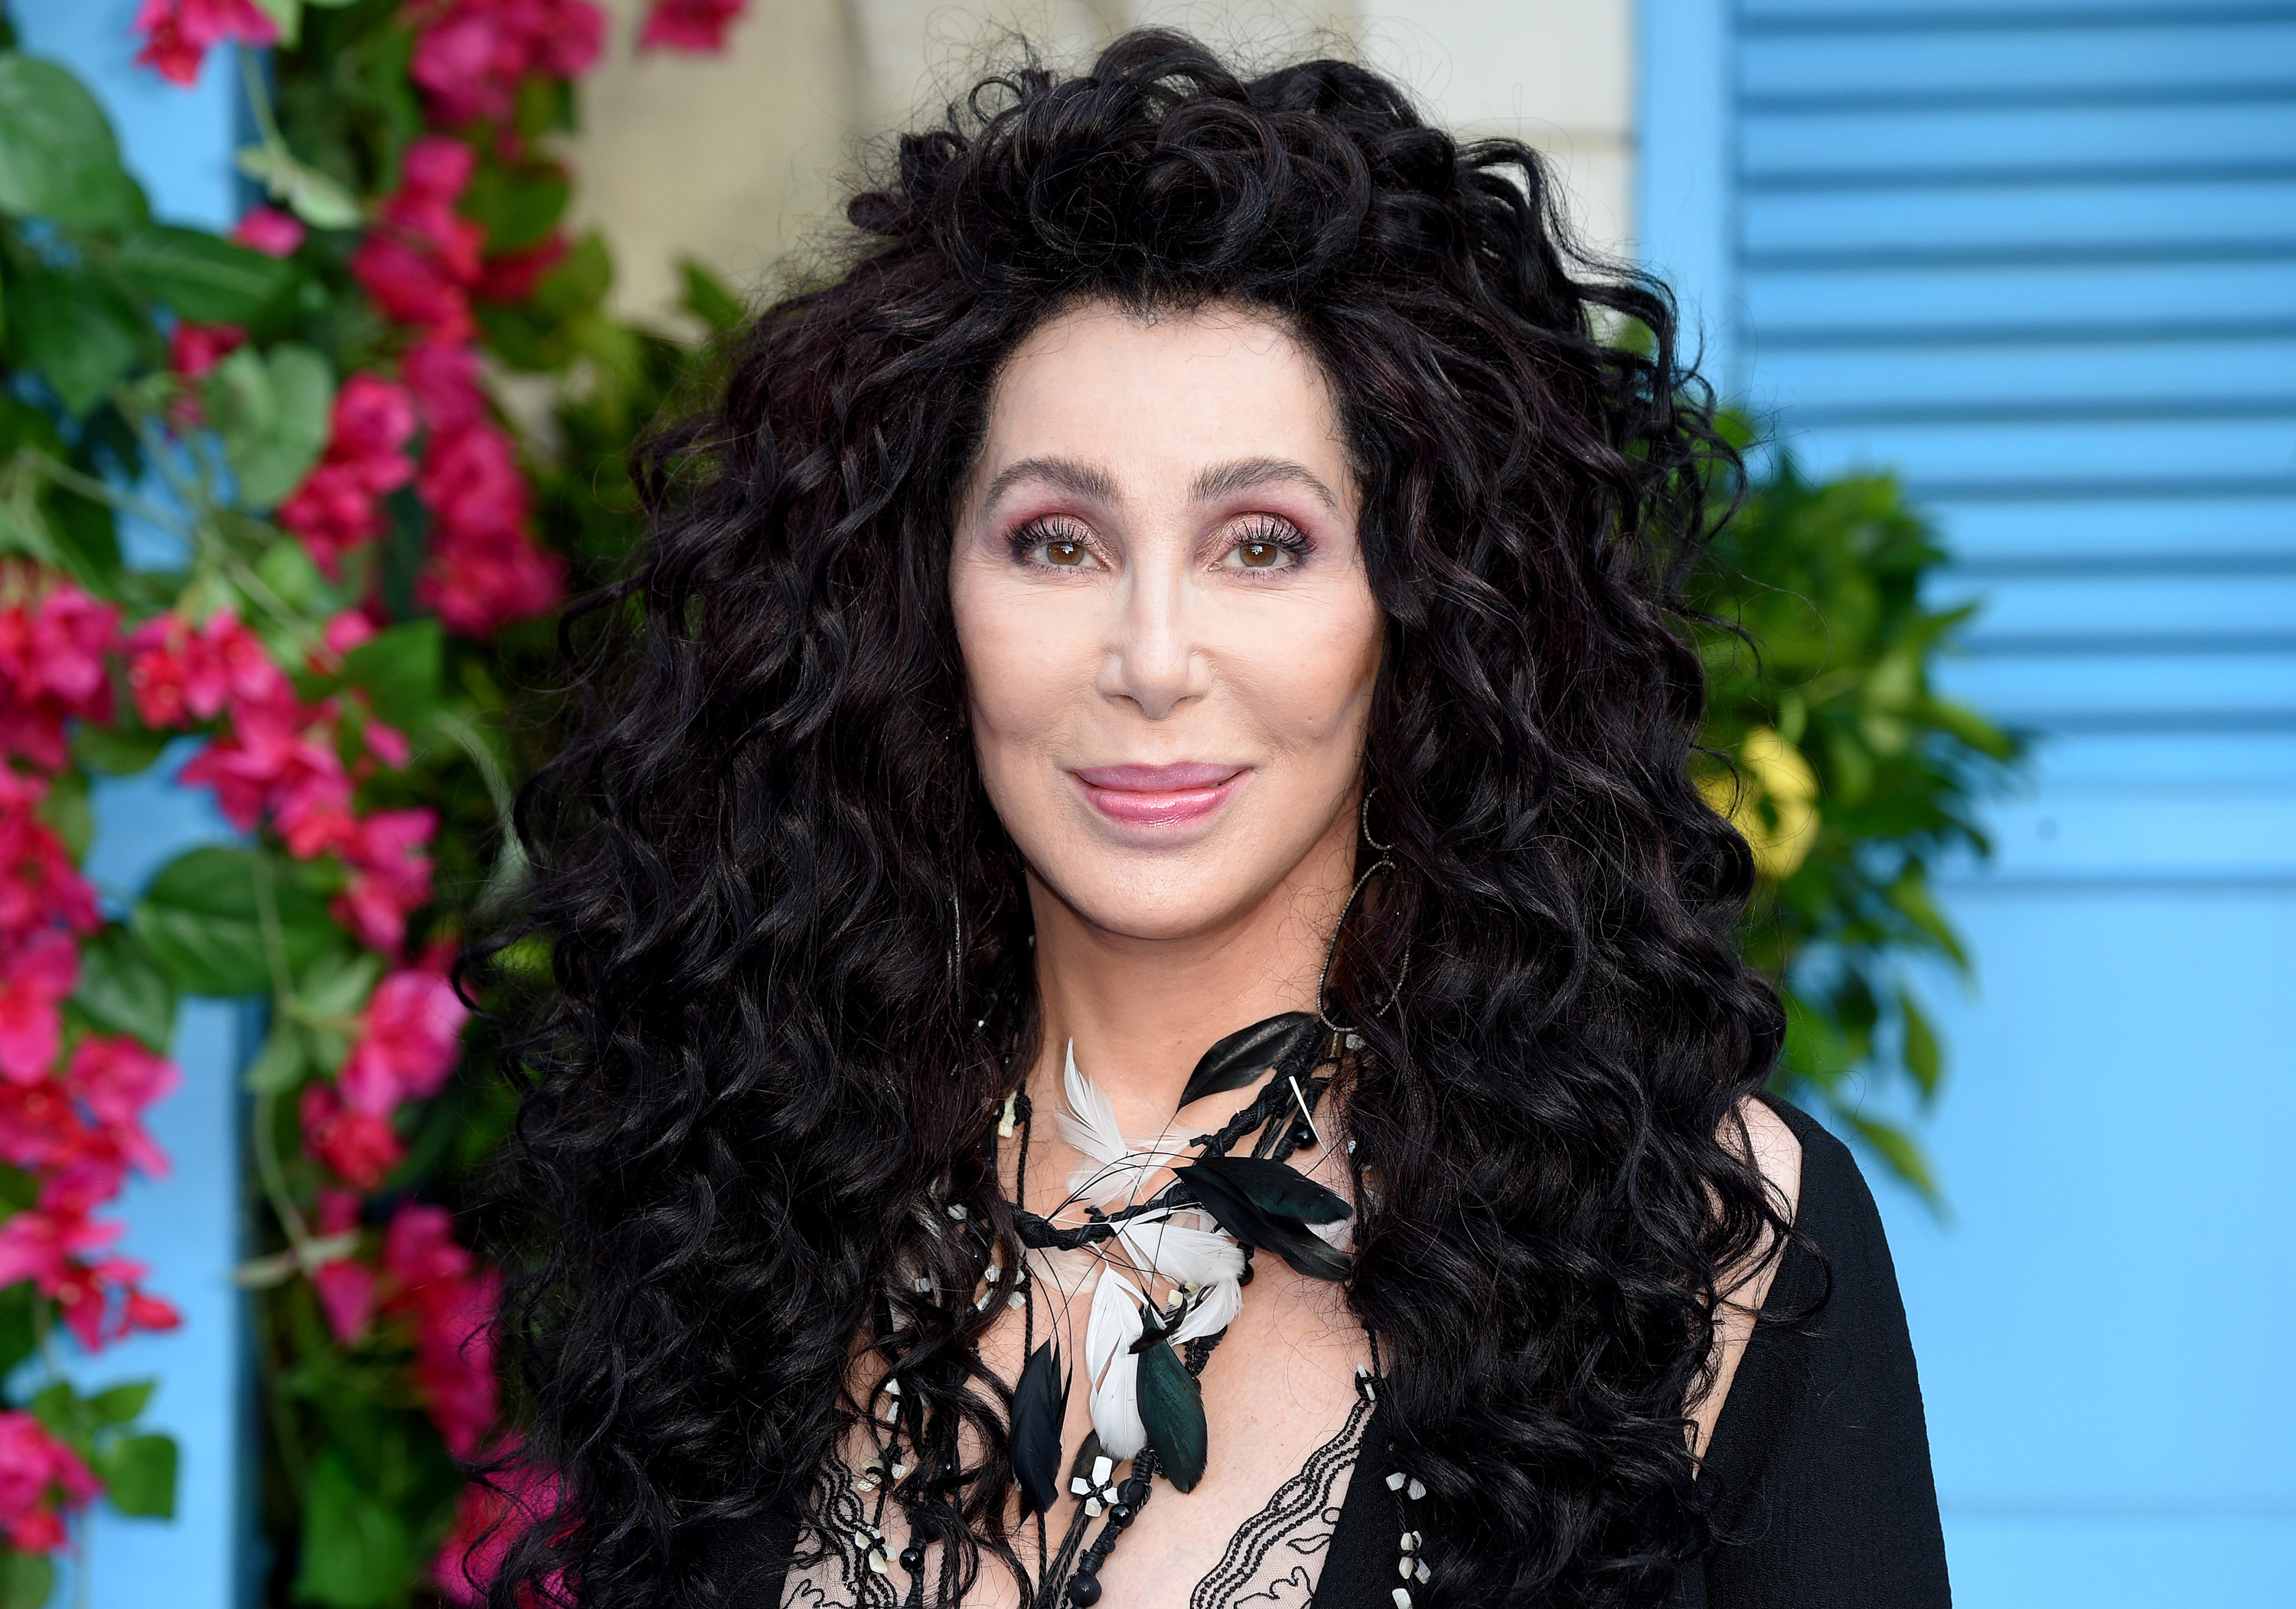 A closeup of Cher